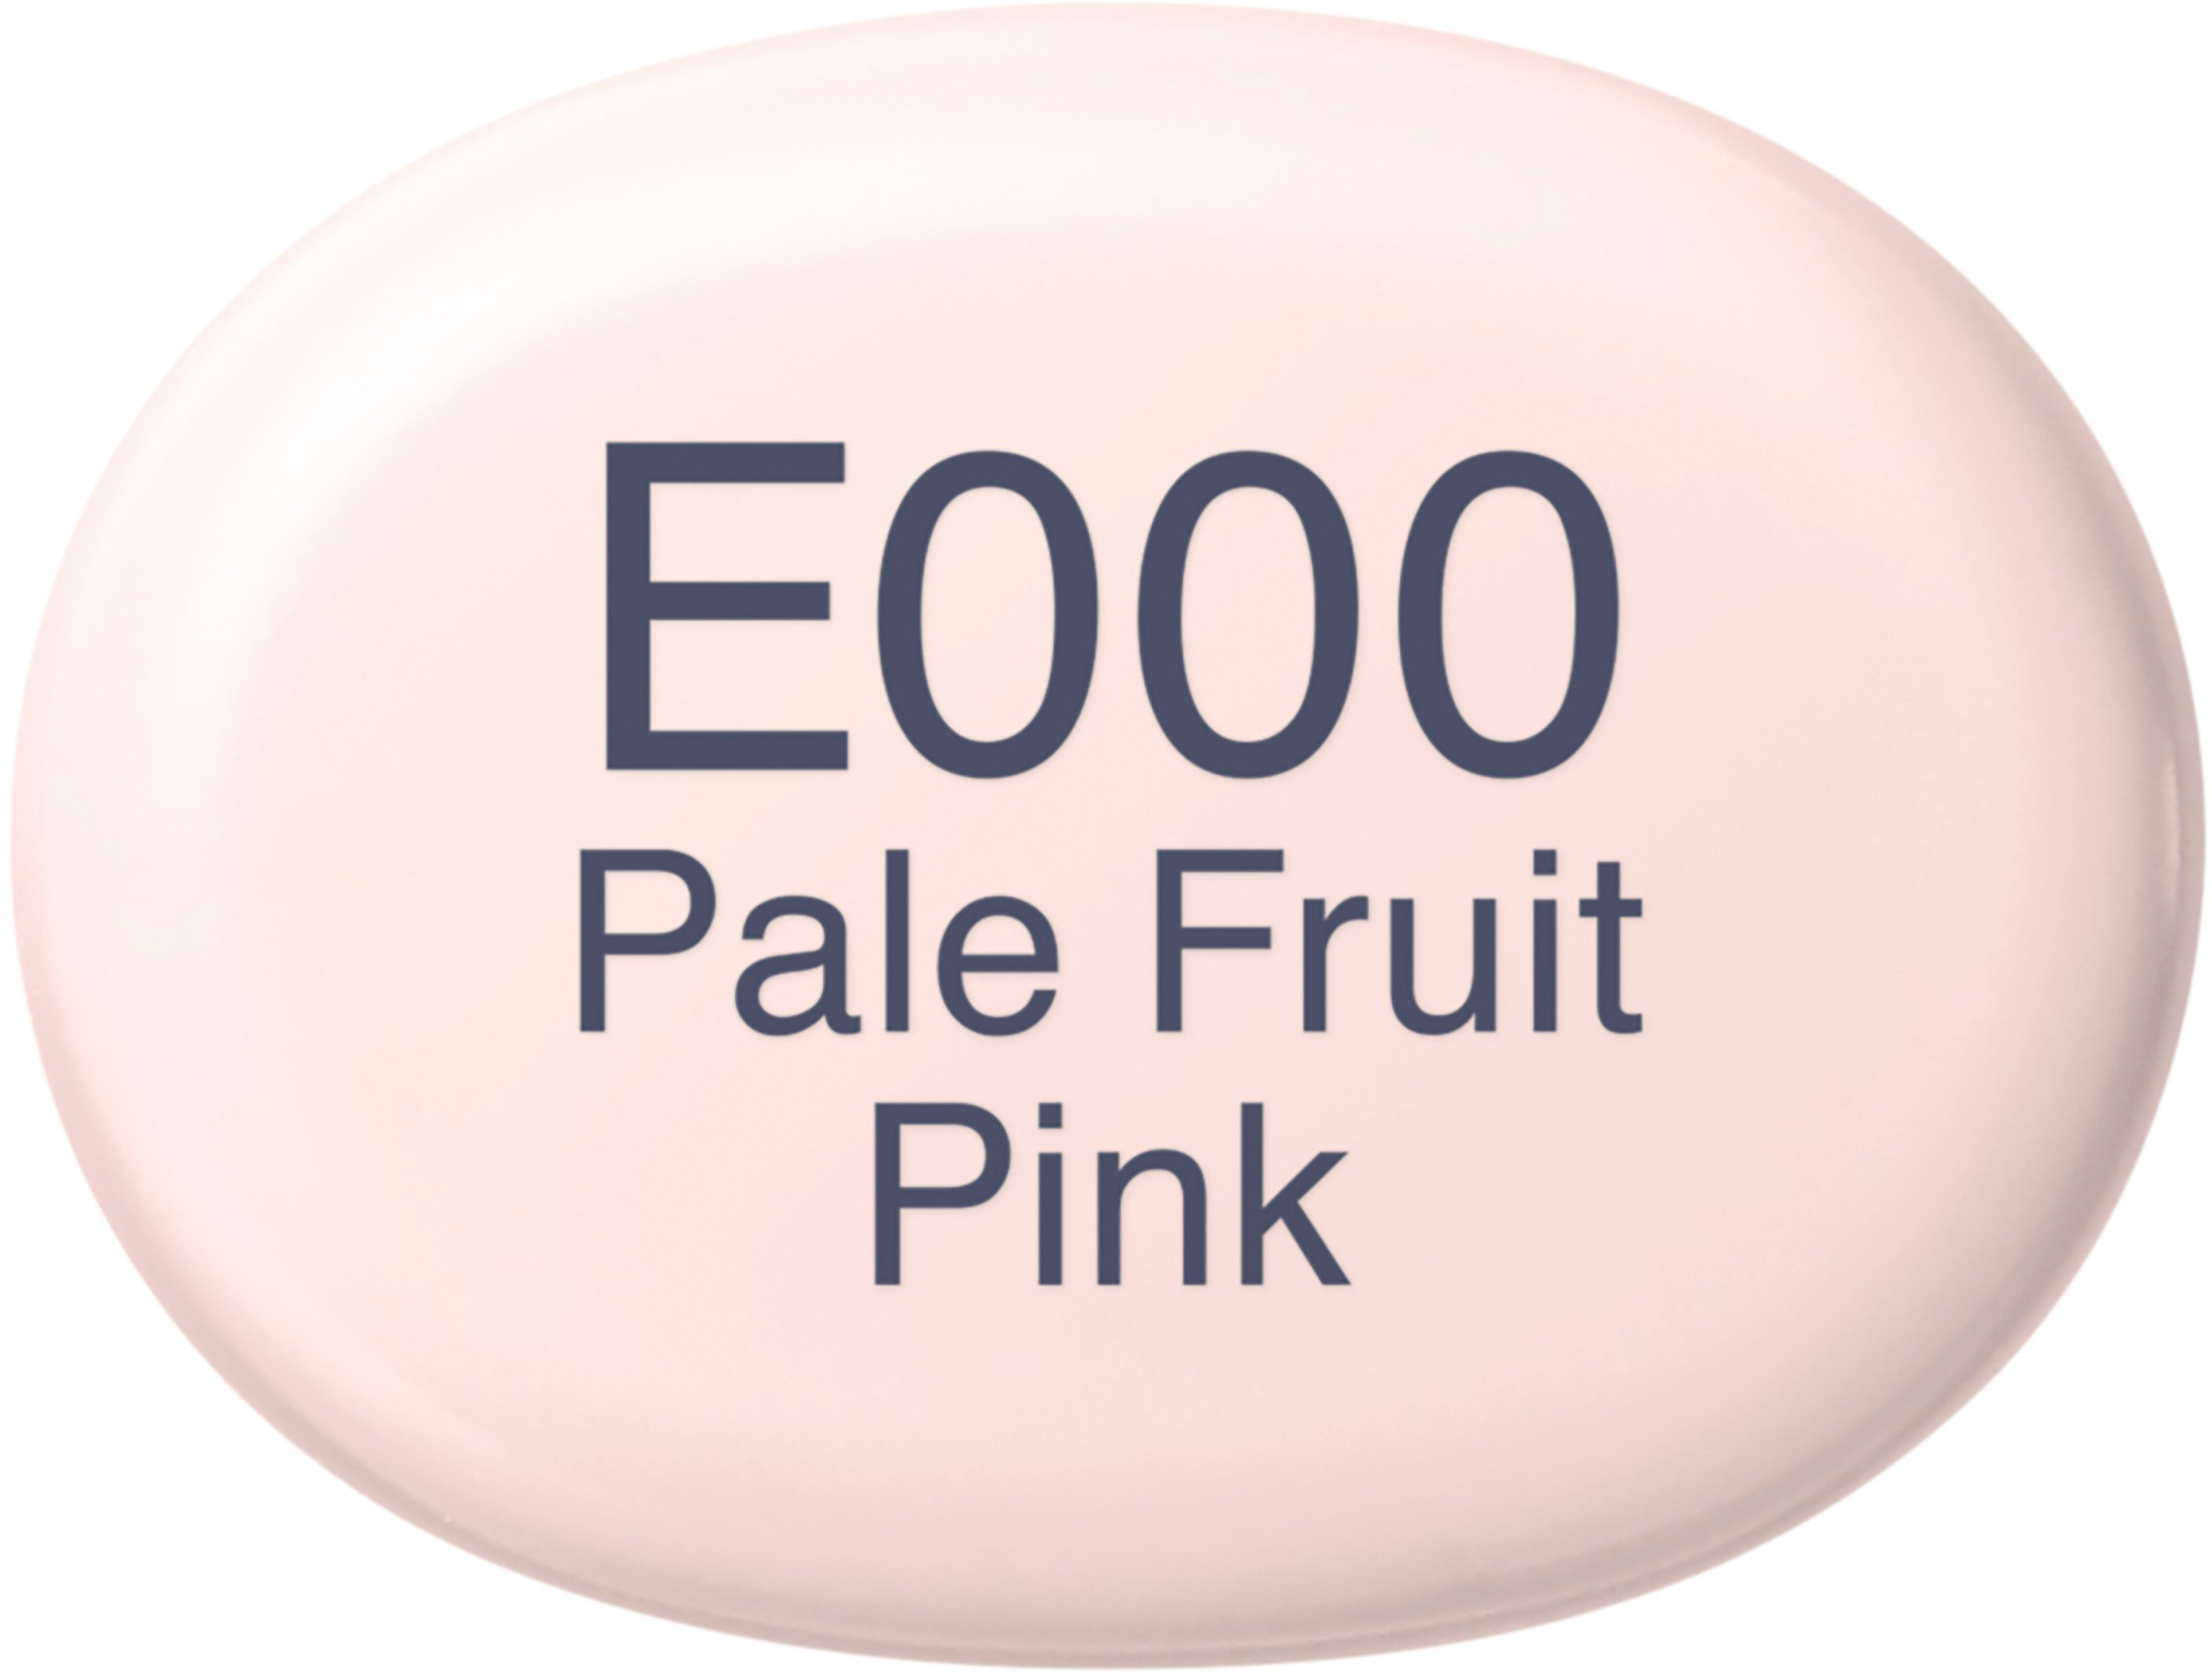 COPIC Marker Sketch 21075324 E000 - Pale Fruit Pink